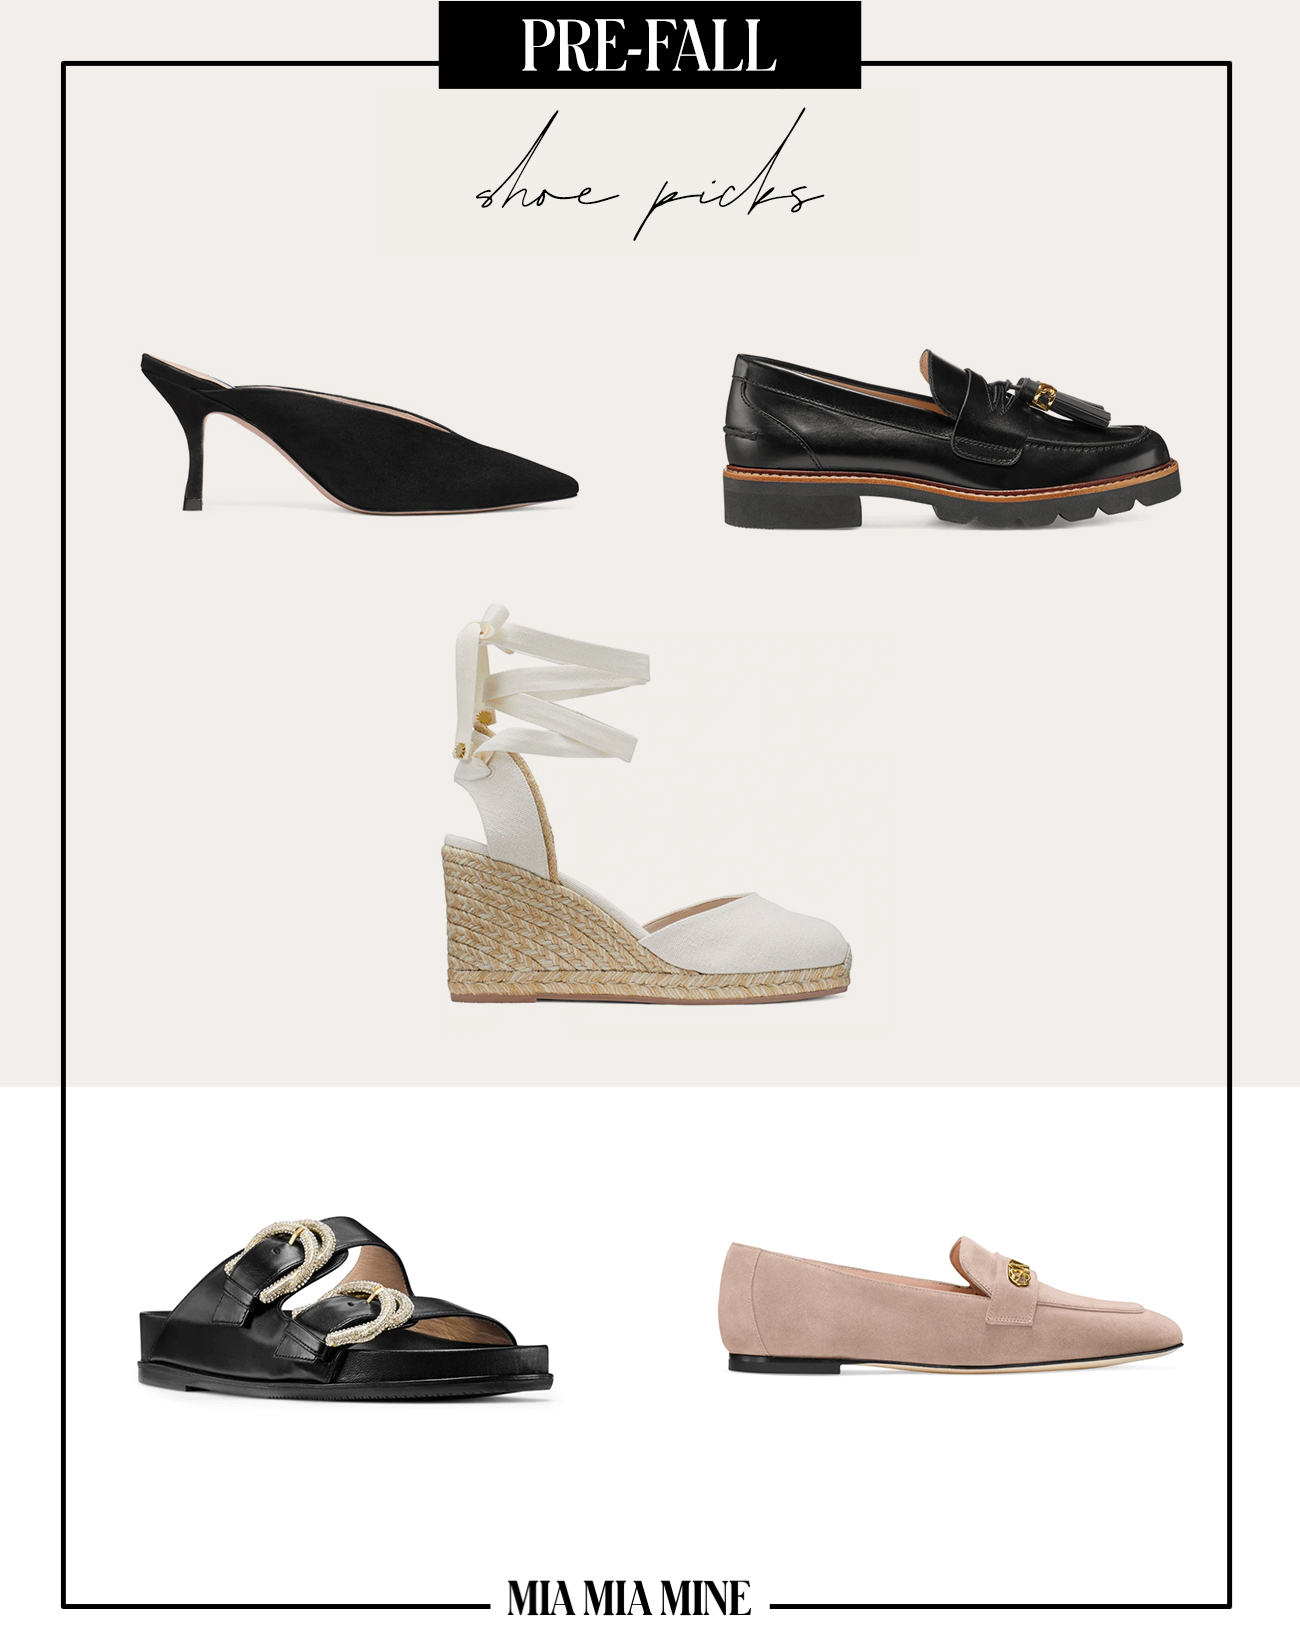 stuart weitzman pre-fall shoe picks by fashion blogger miamiamine